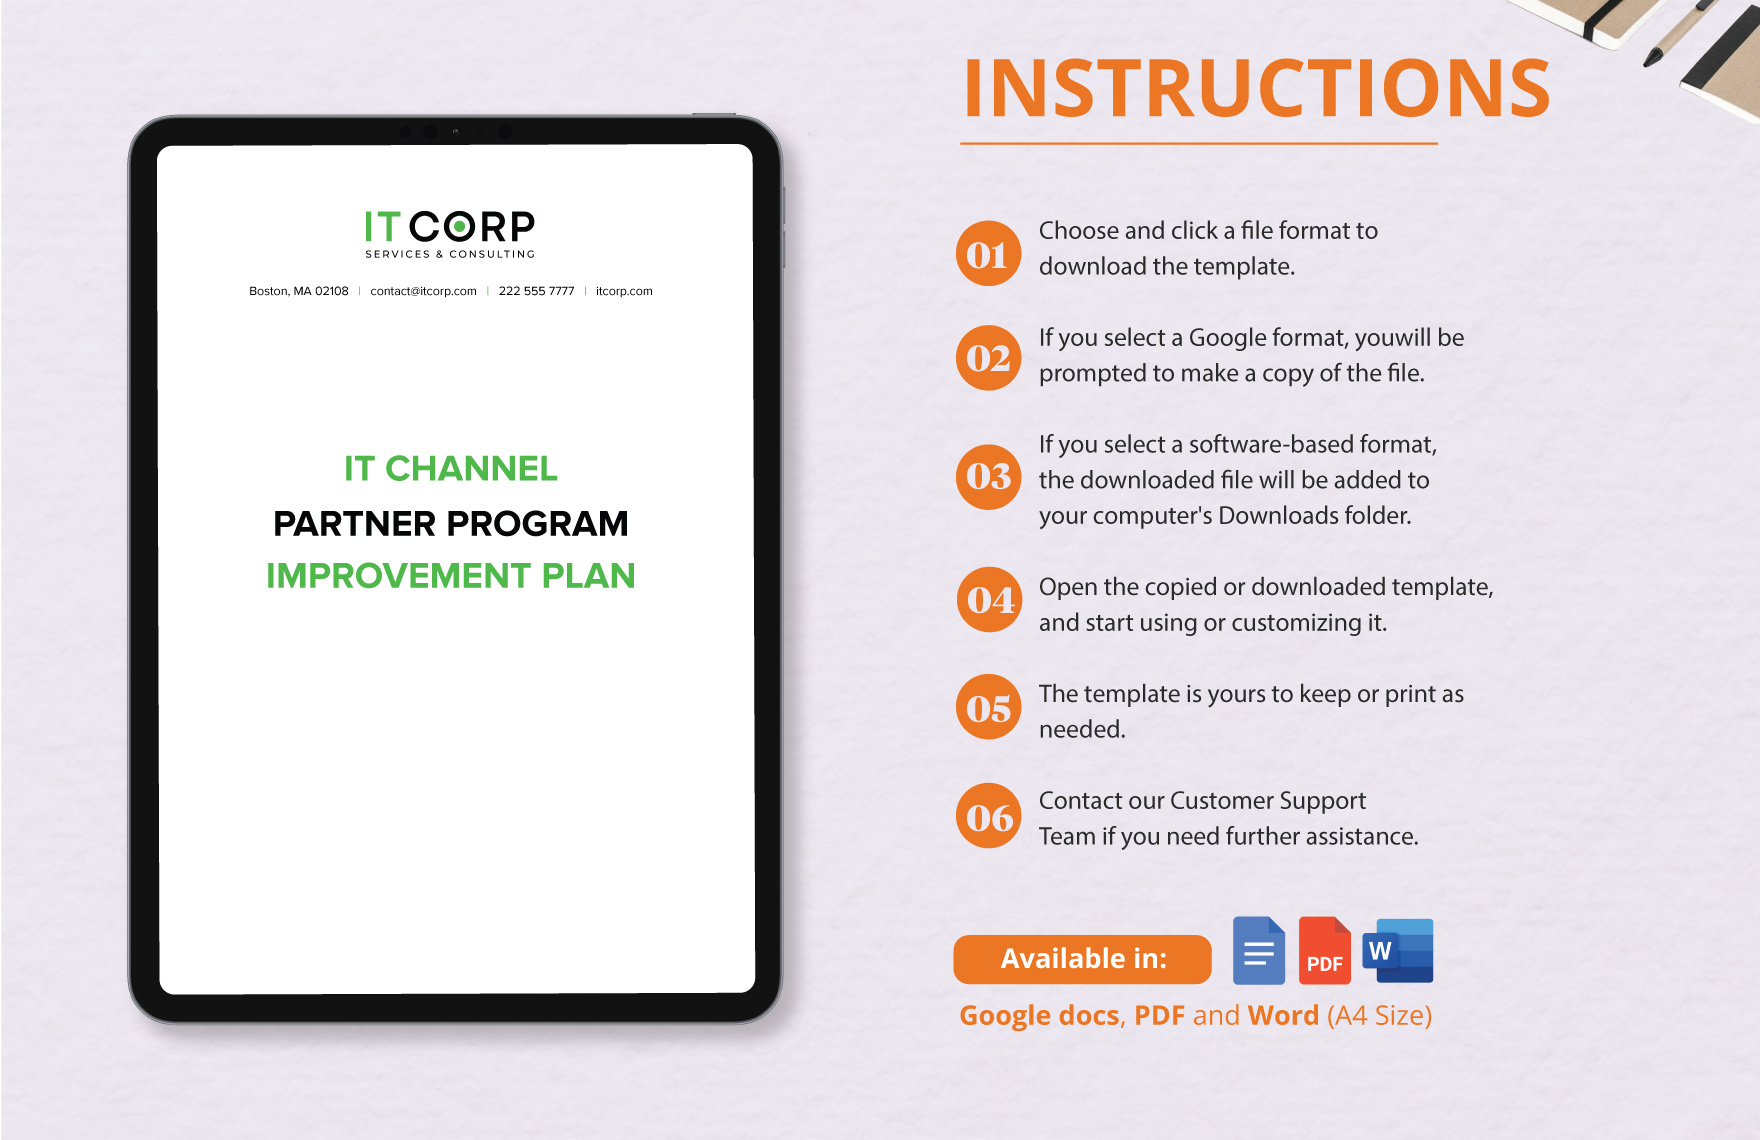 IT Channel Partner Program Improvement Plan Template